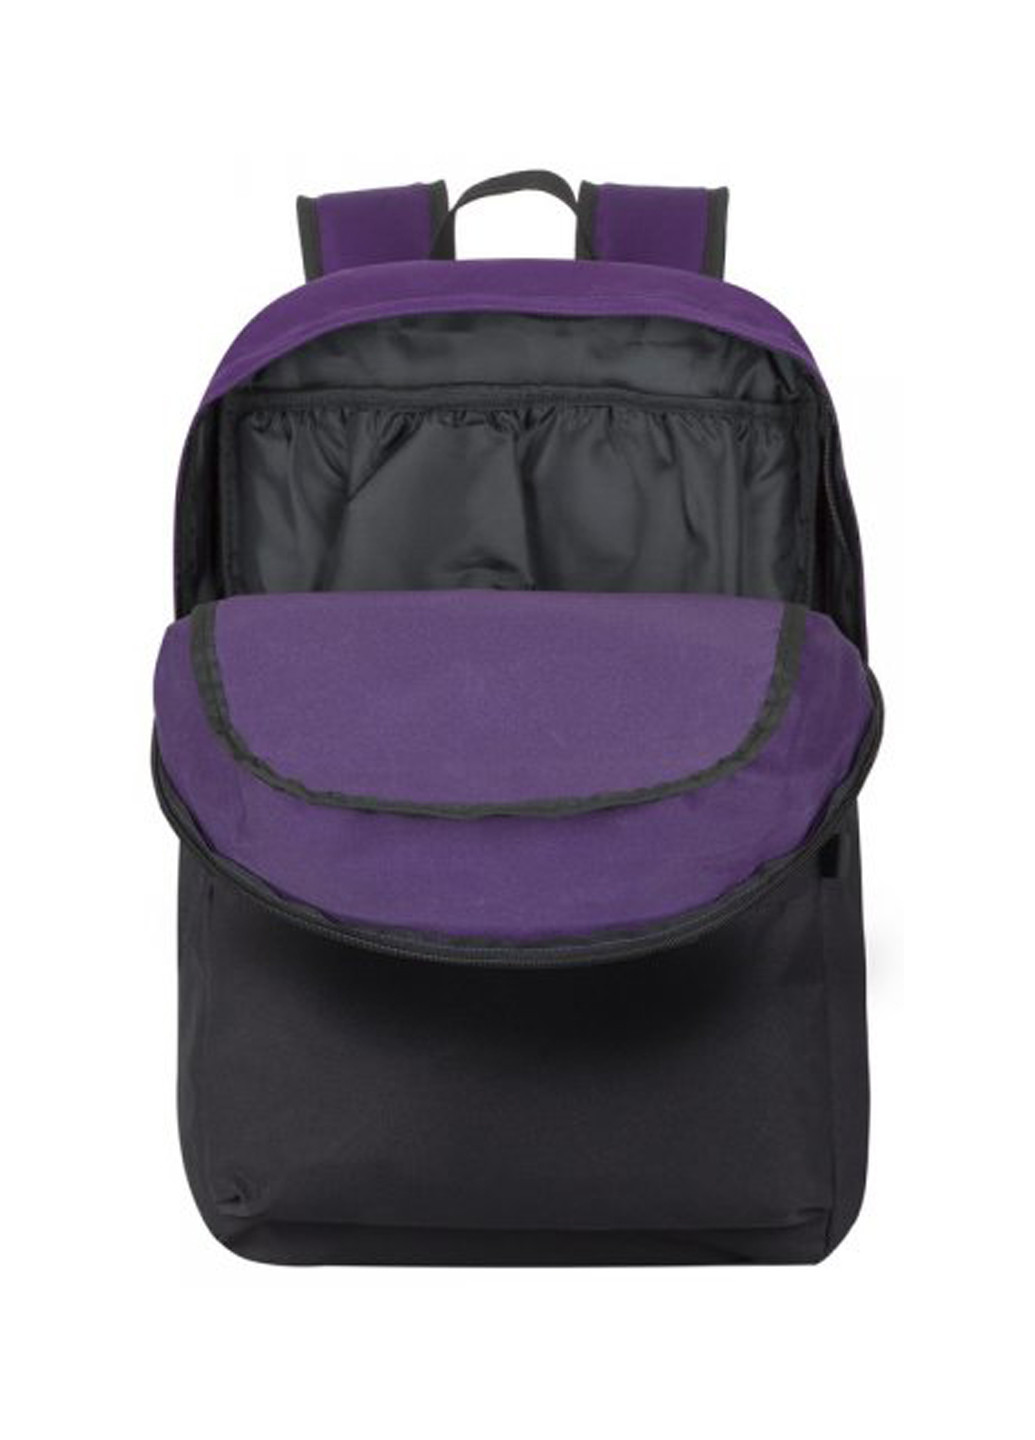 Рюкзак для ноутбука RIVACASE 5560 (violet/black) (139252107)